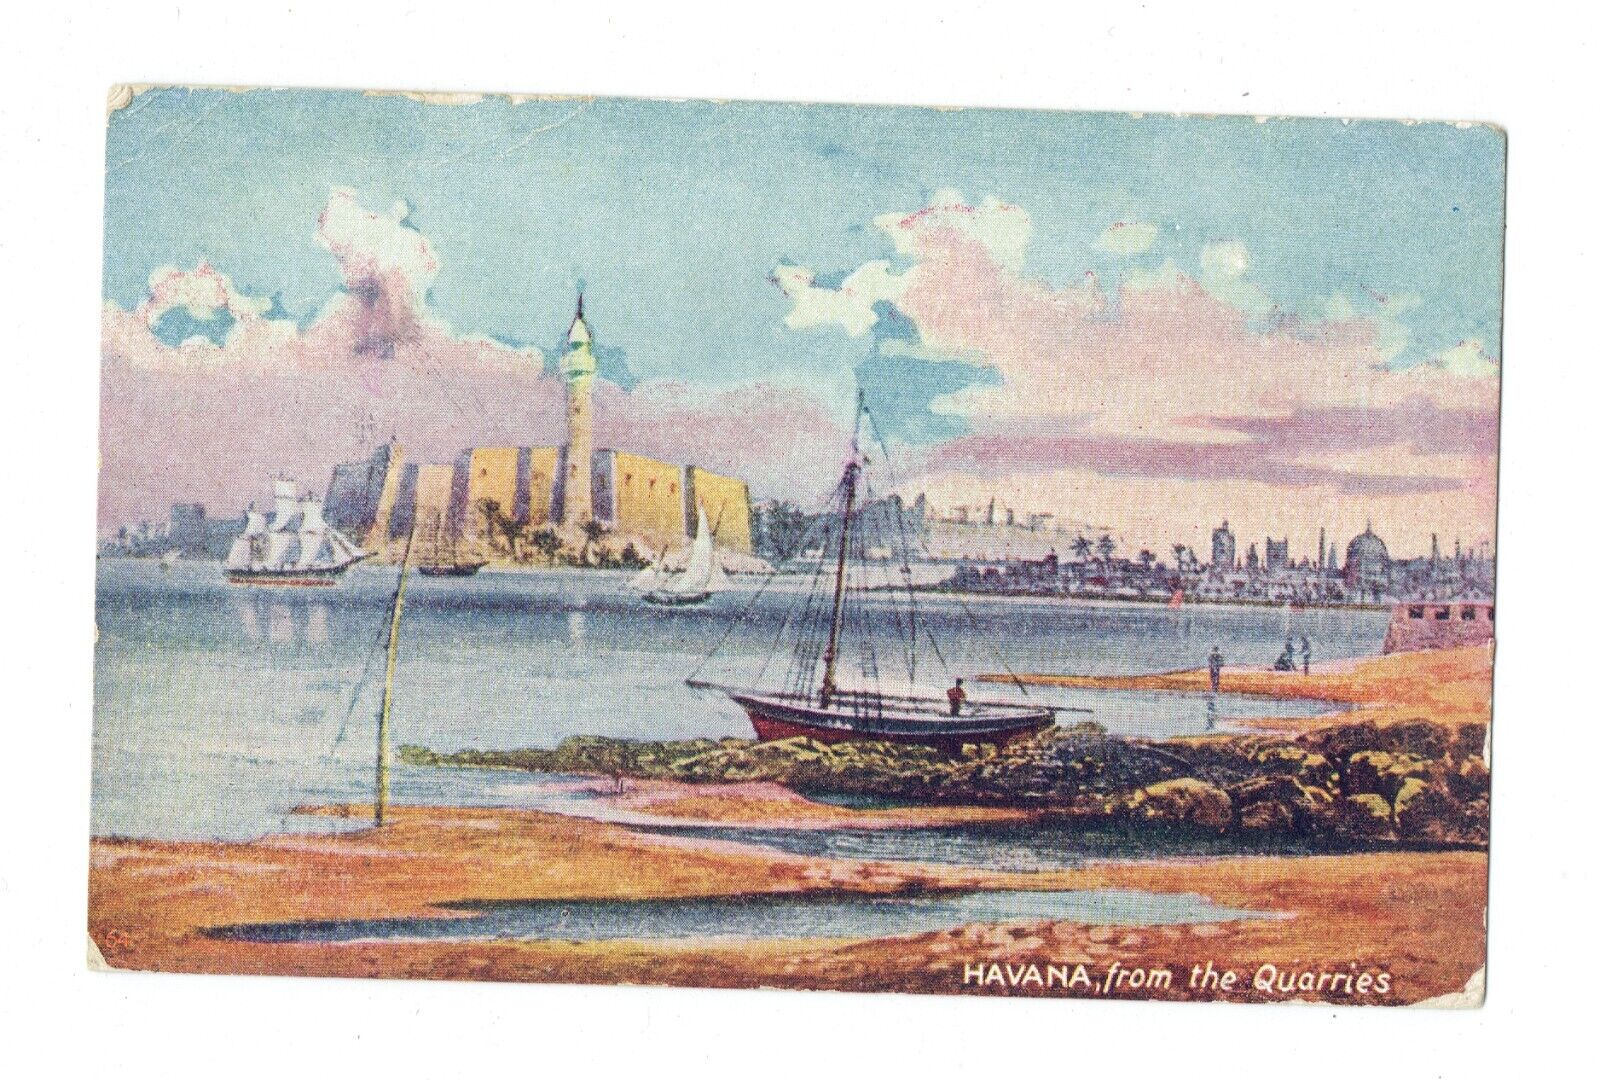 Postcard Vin(1)Cuba, Havana from the Quarries #64 P 1910(mailed/USA) 114 Yr  209